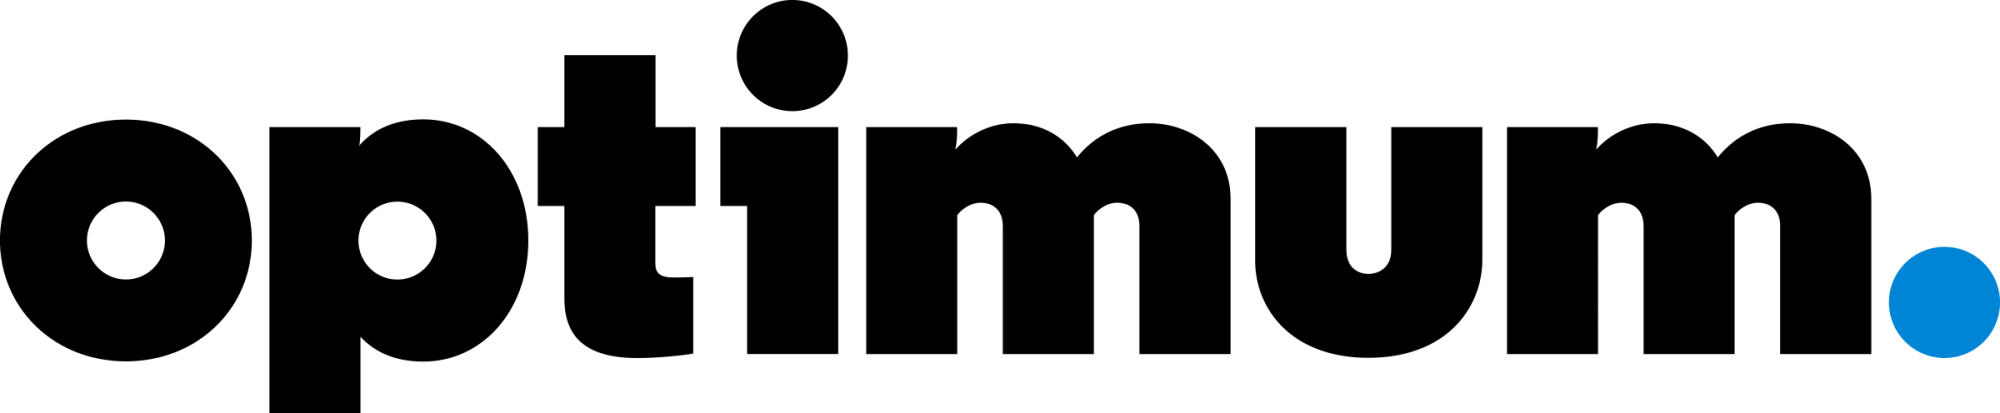 optimum brand logo